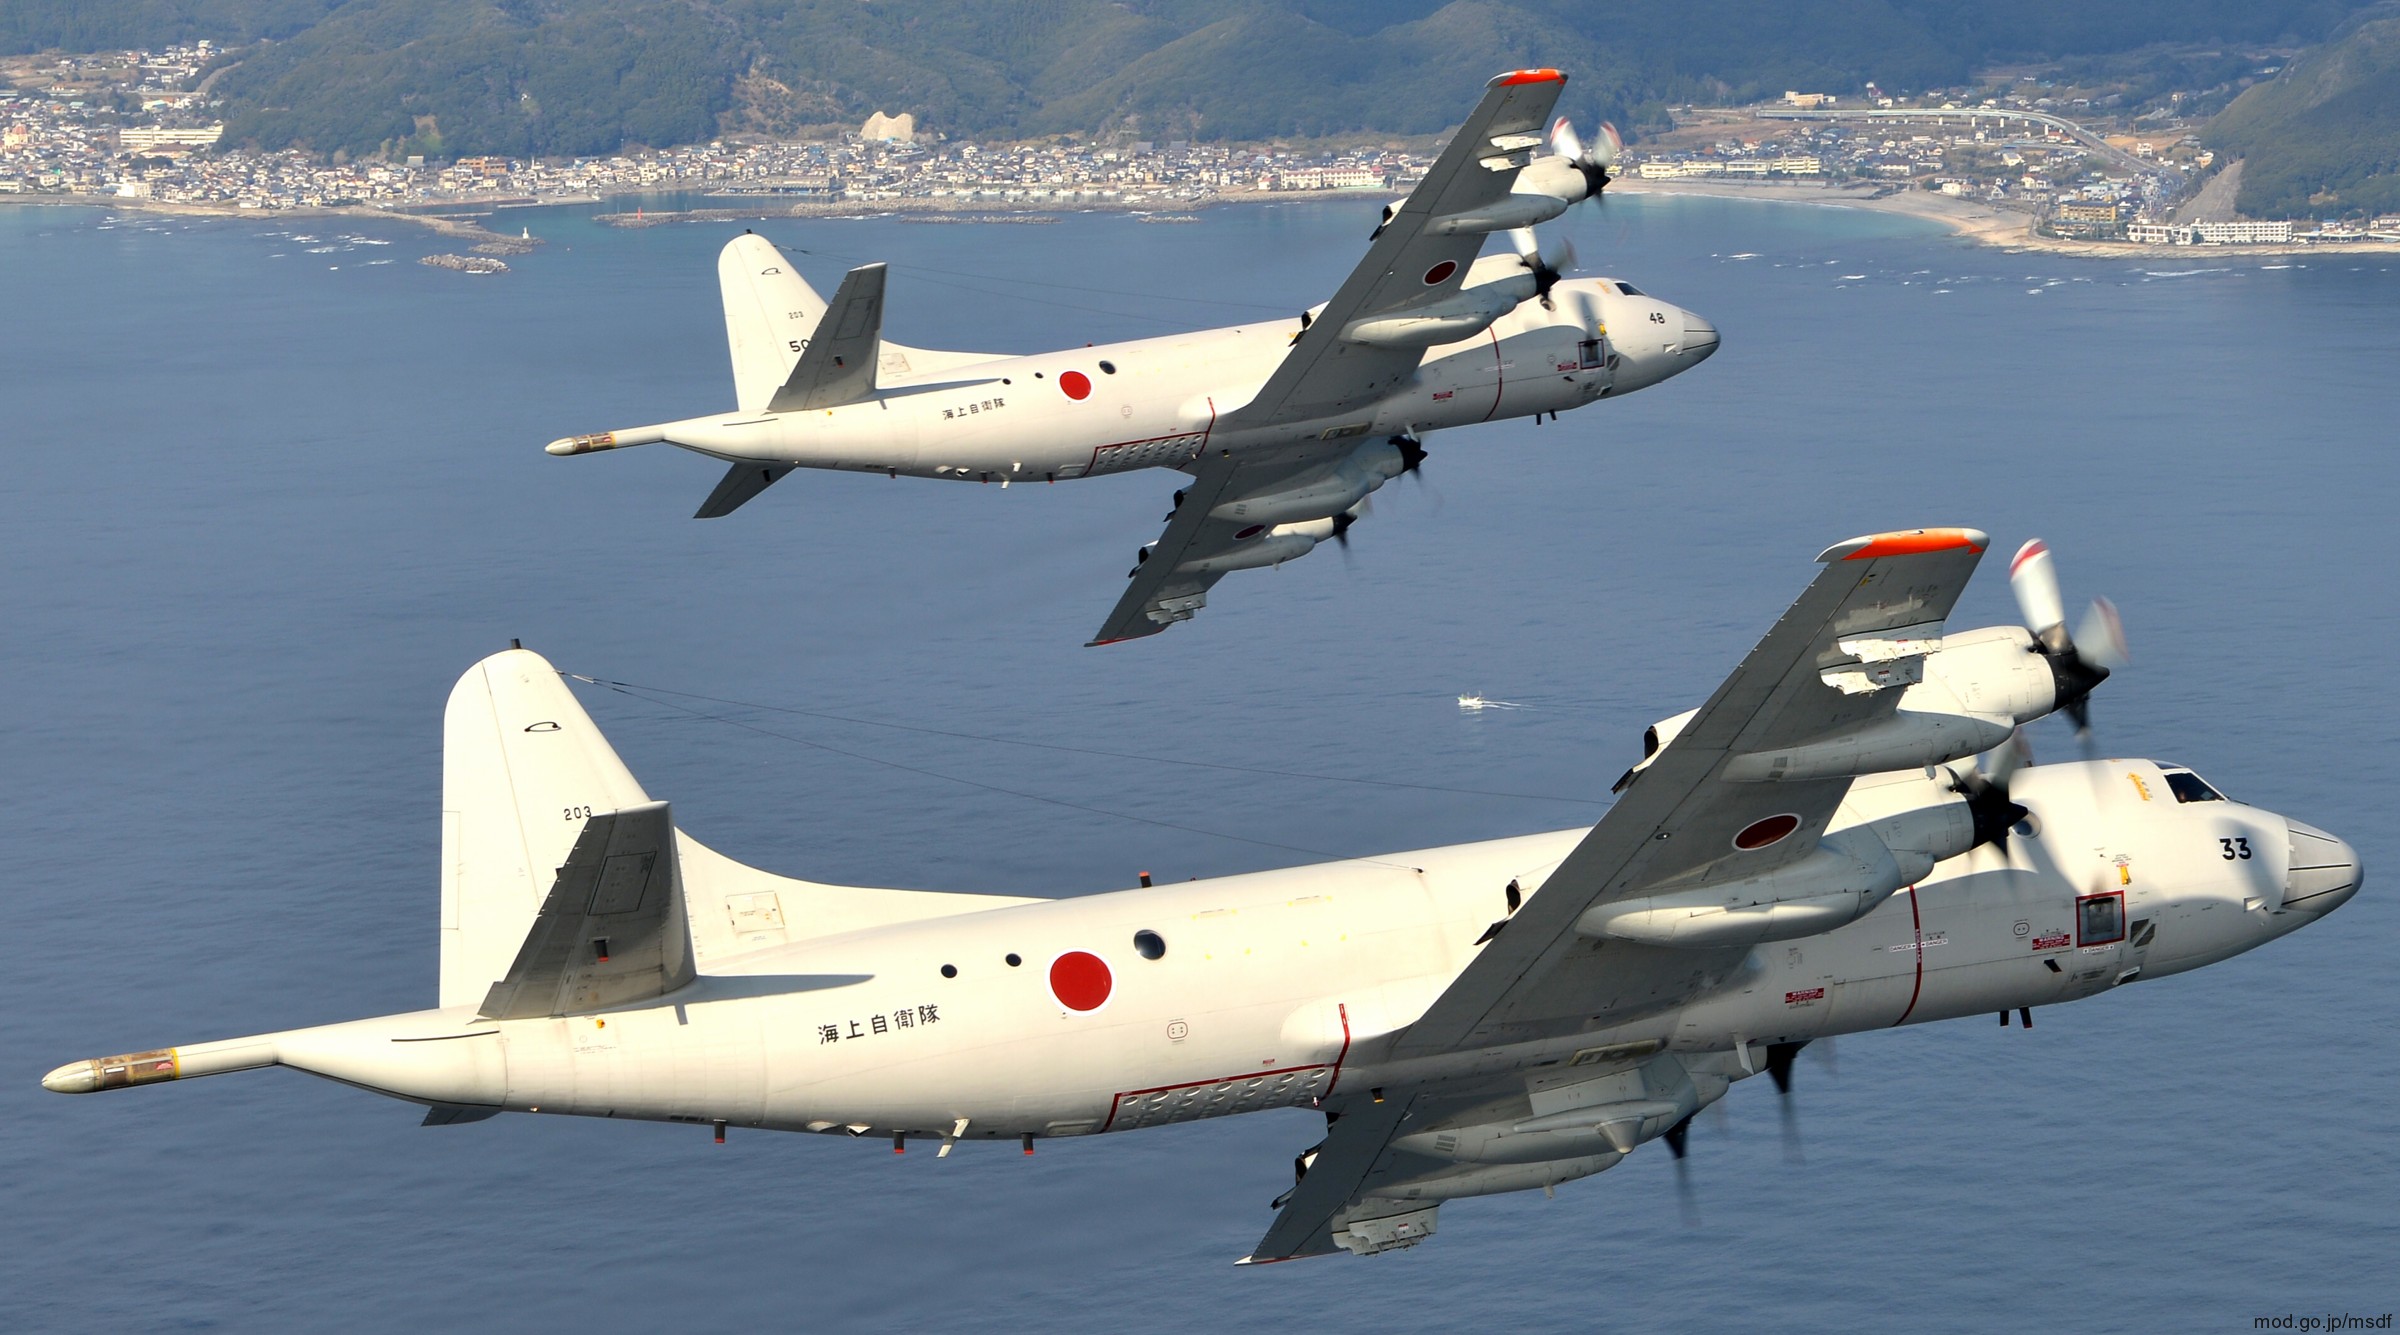 kawasaki p-3c orion patrol aircraft mpa japan maritime self defense force jmsdf 5033 05